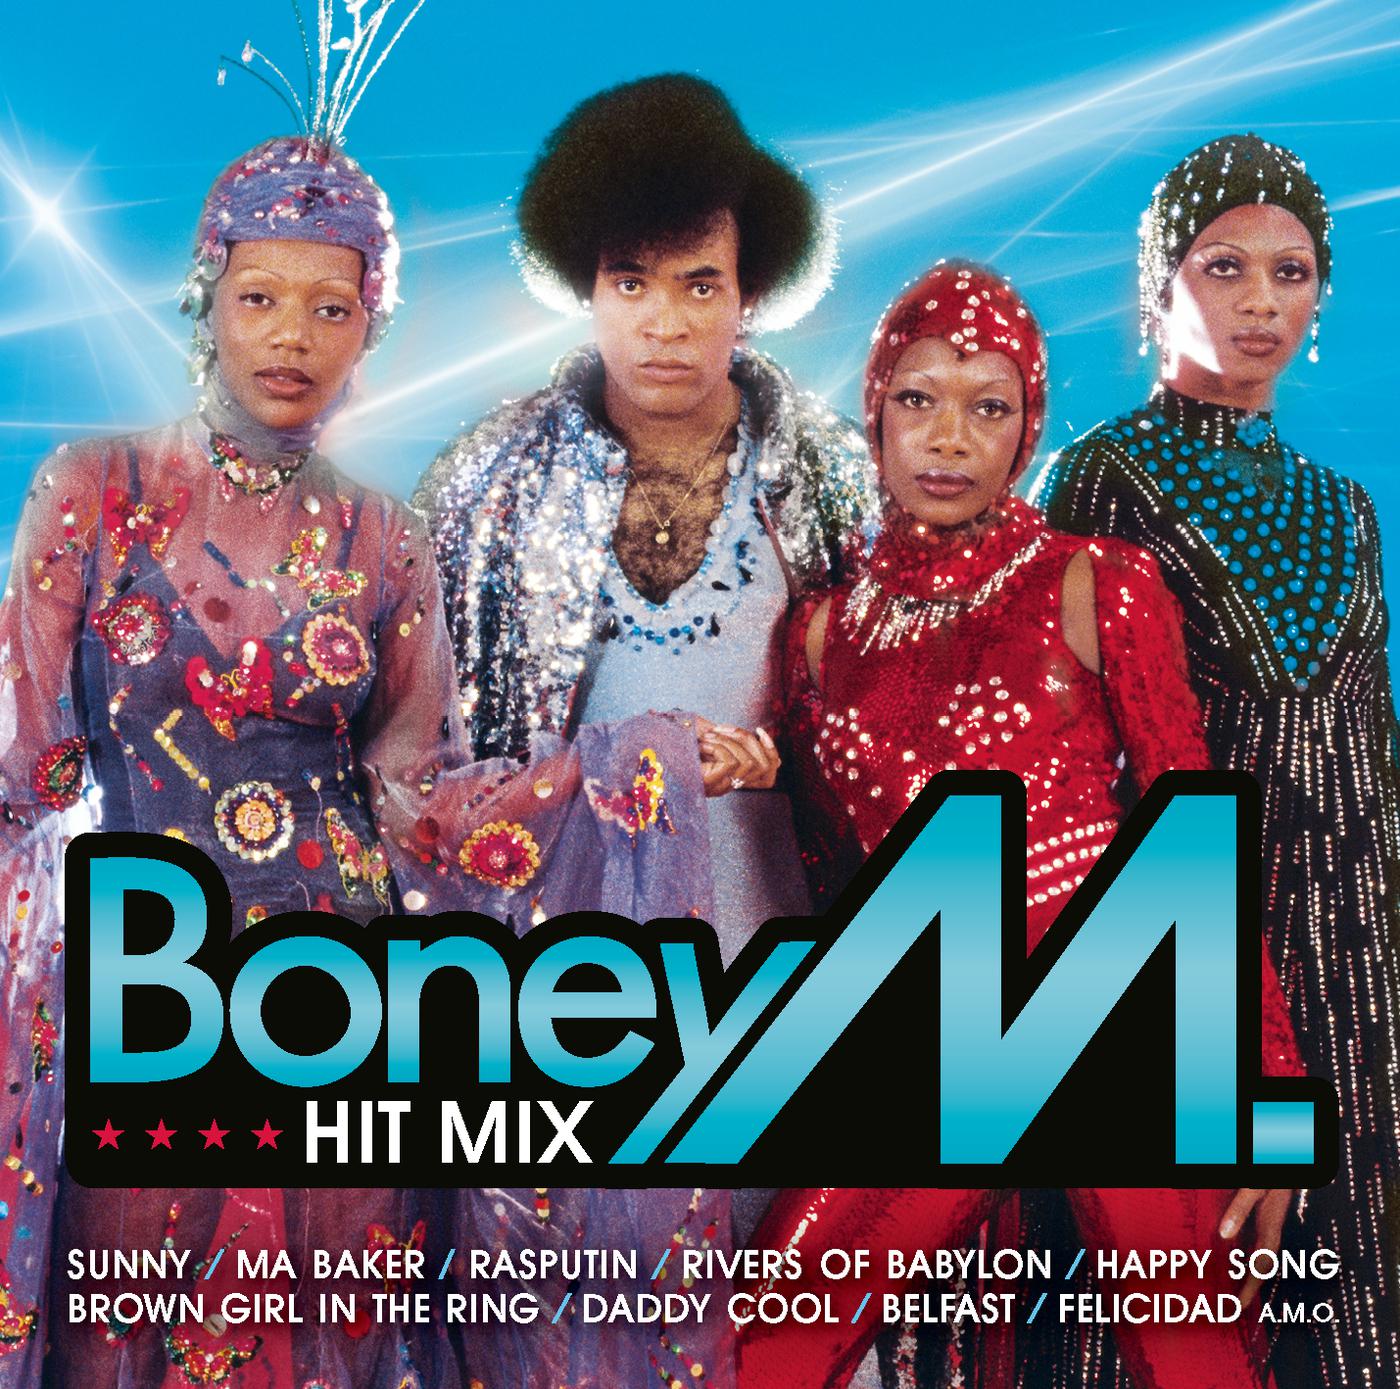 Boney m kalimba. Группа Бони м. Группа Boney m. в 80. Состав группы Бони м 1977. Boney m обложка.